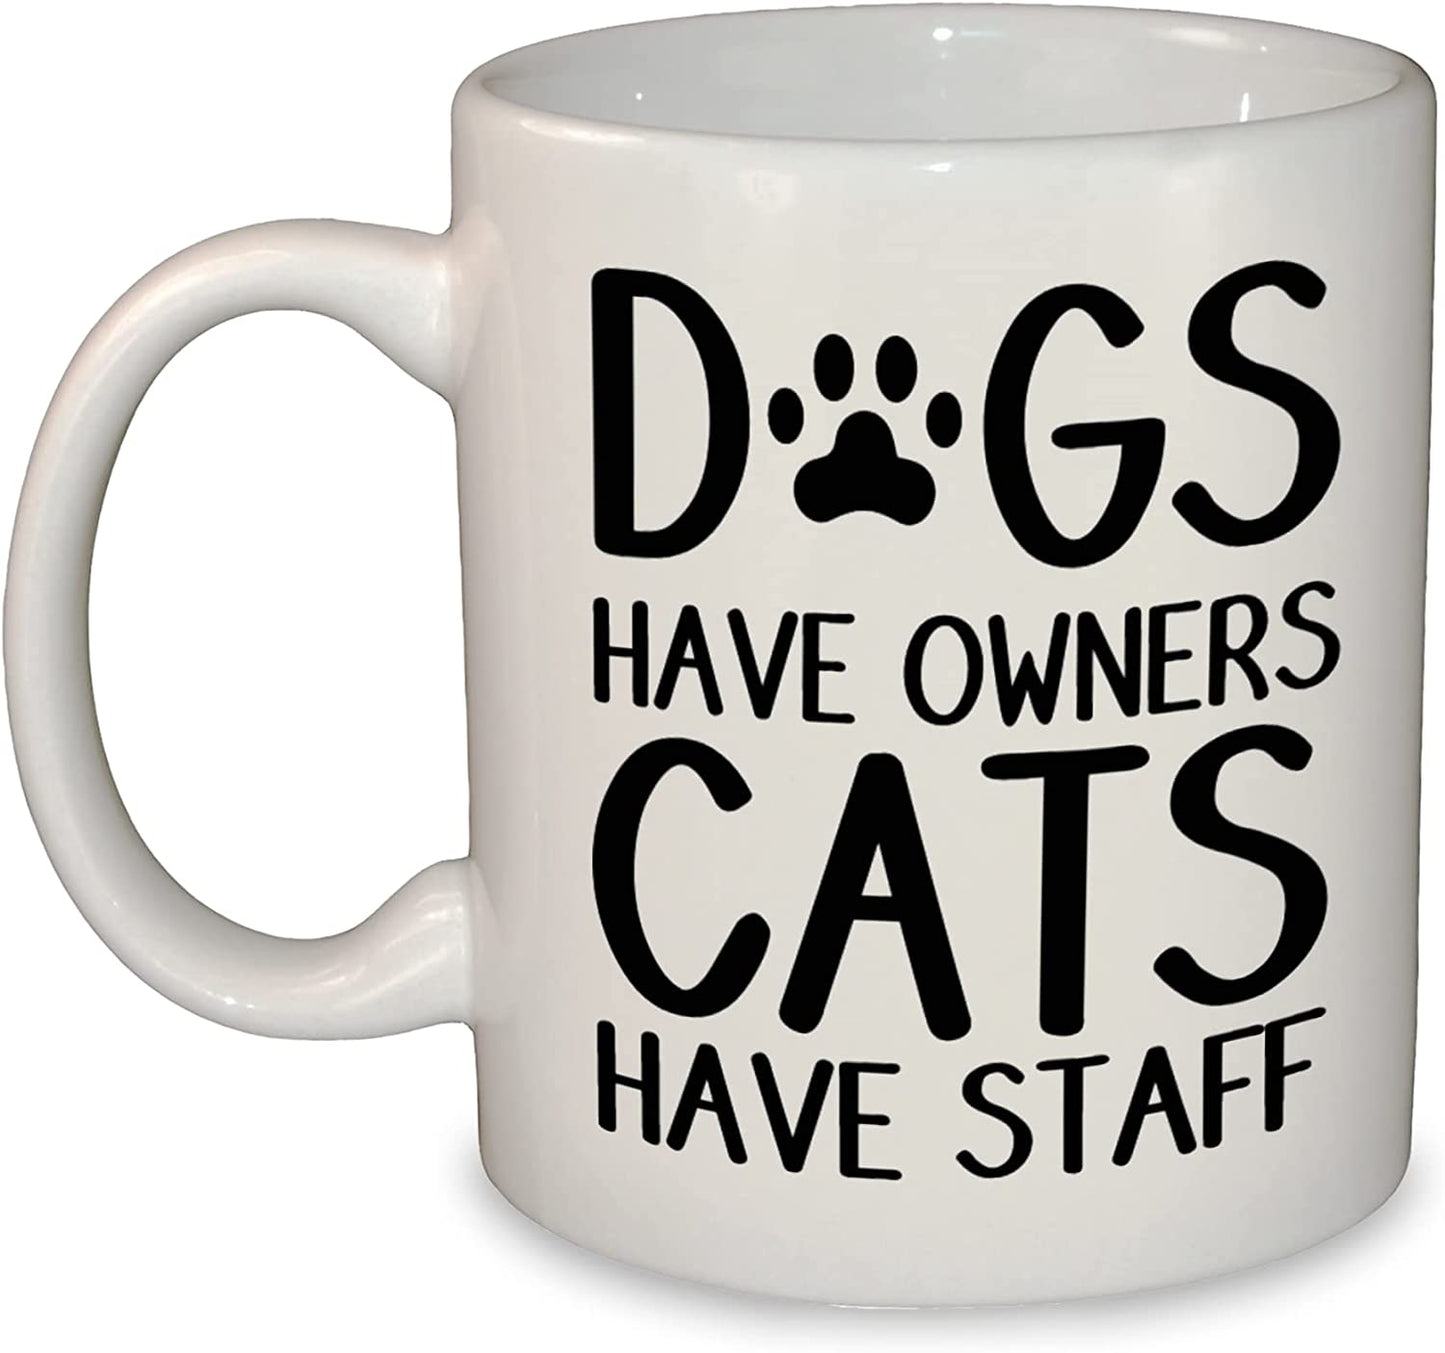 Cats vs Dogs Funny Mug / Cup - 11oz Ceramic - Dishwasher & Microwave Safe